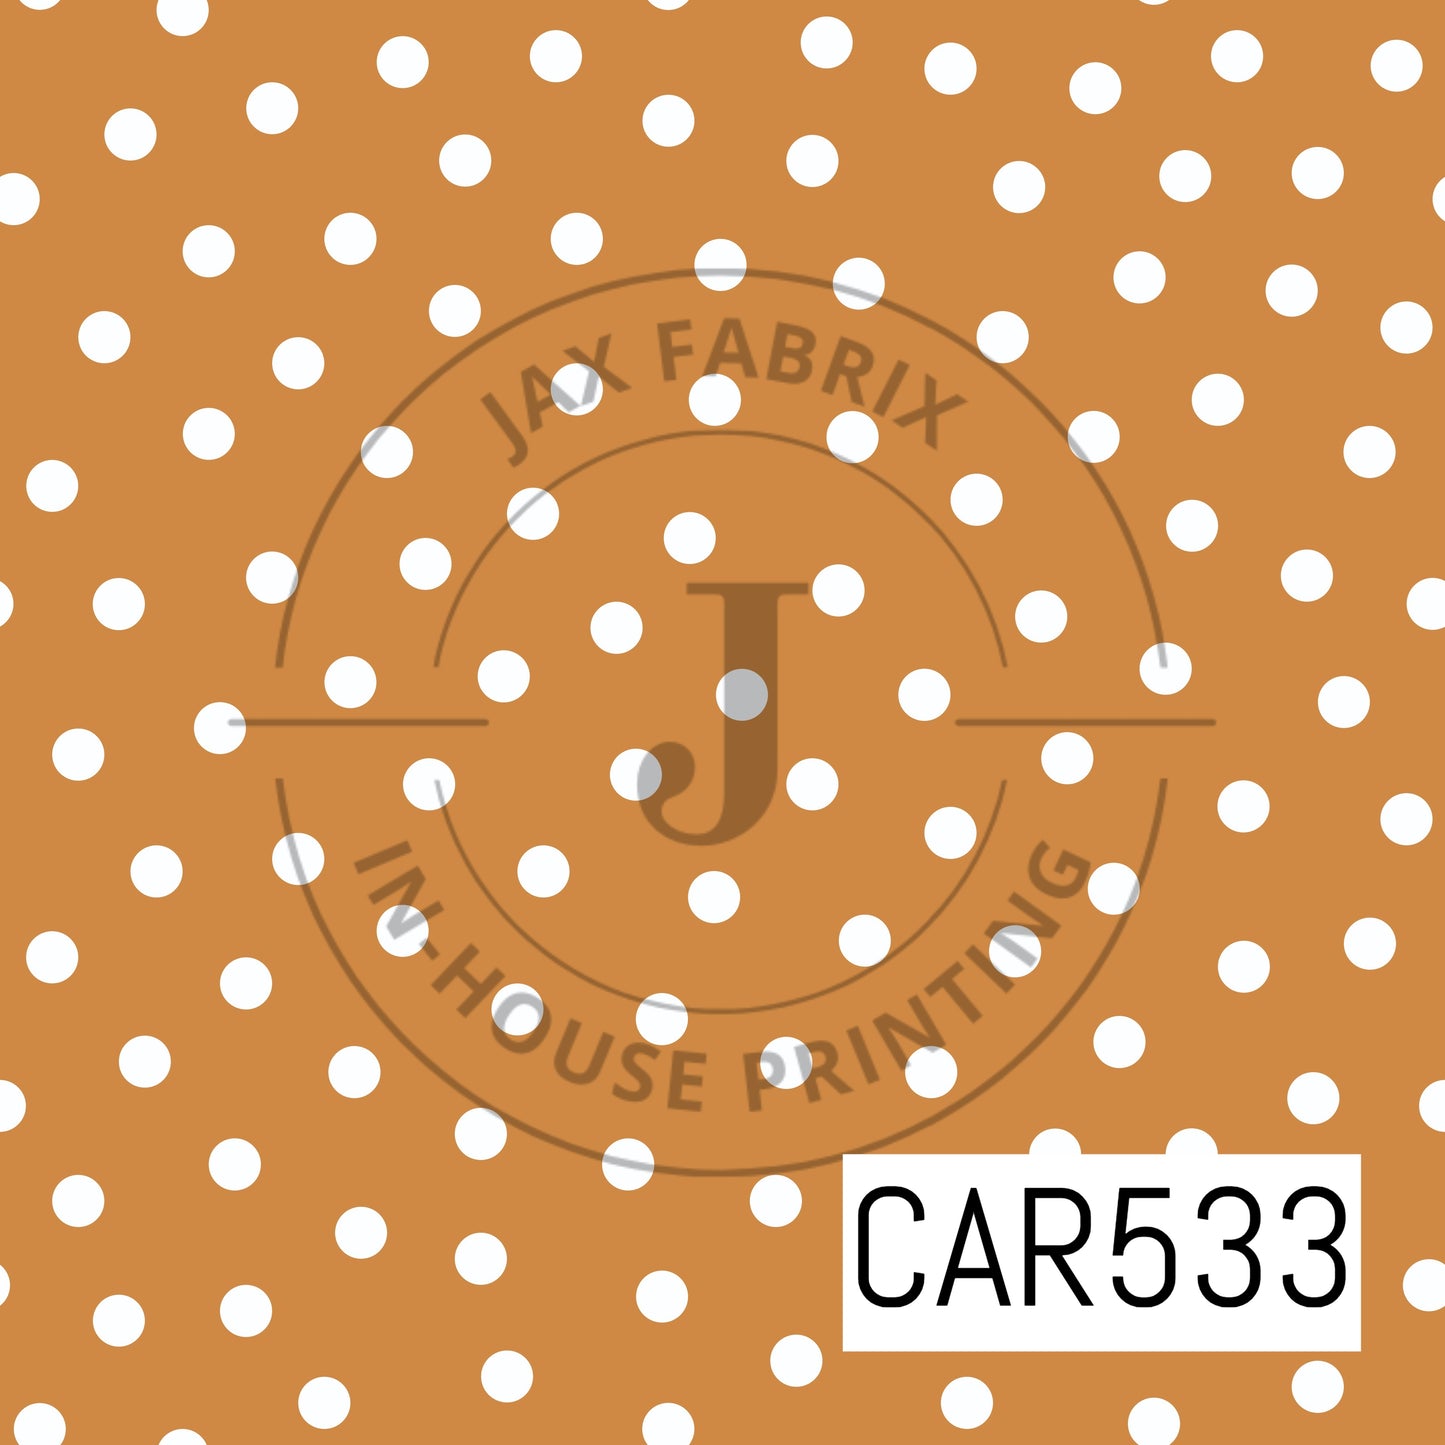 Bunny Dots Orange CAR533